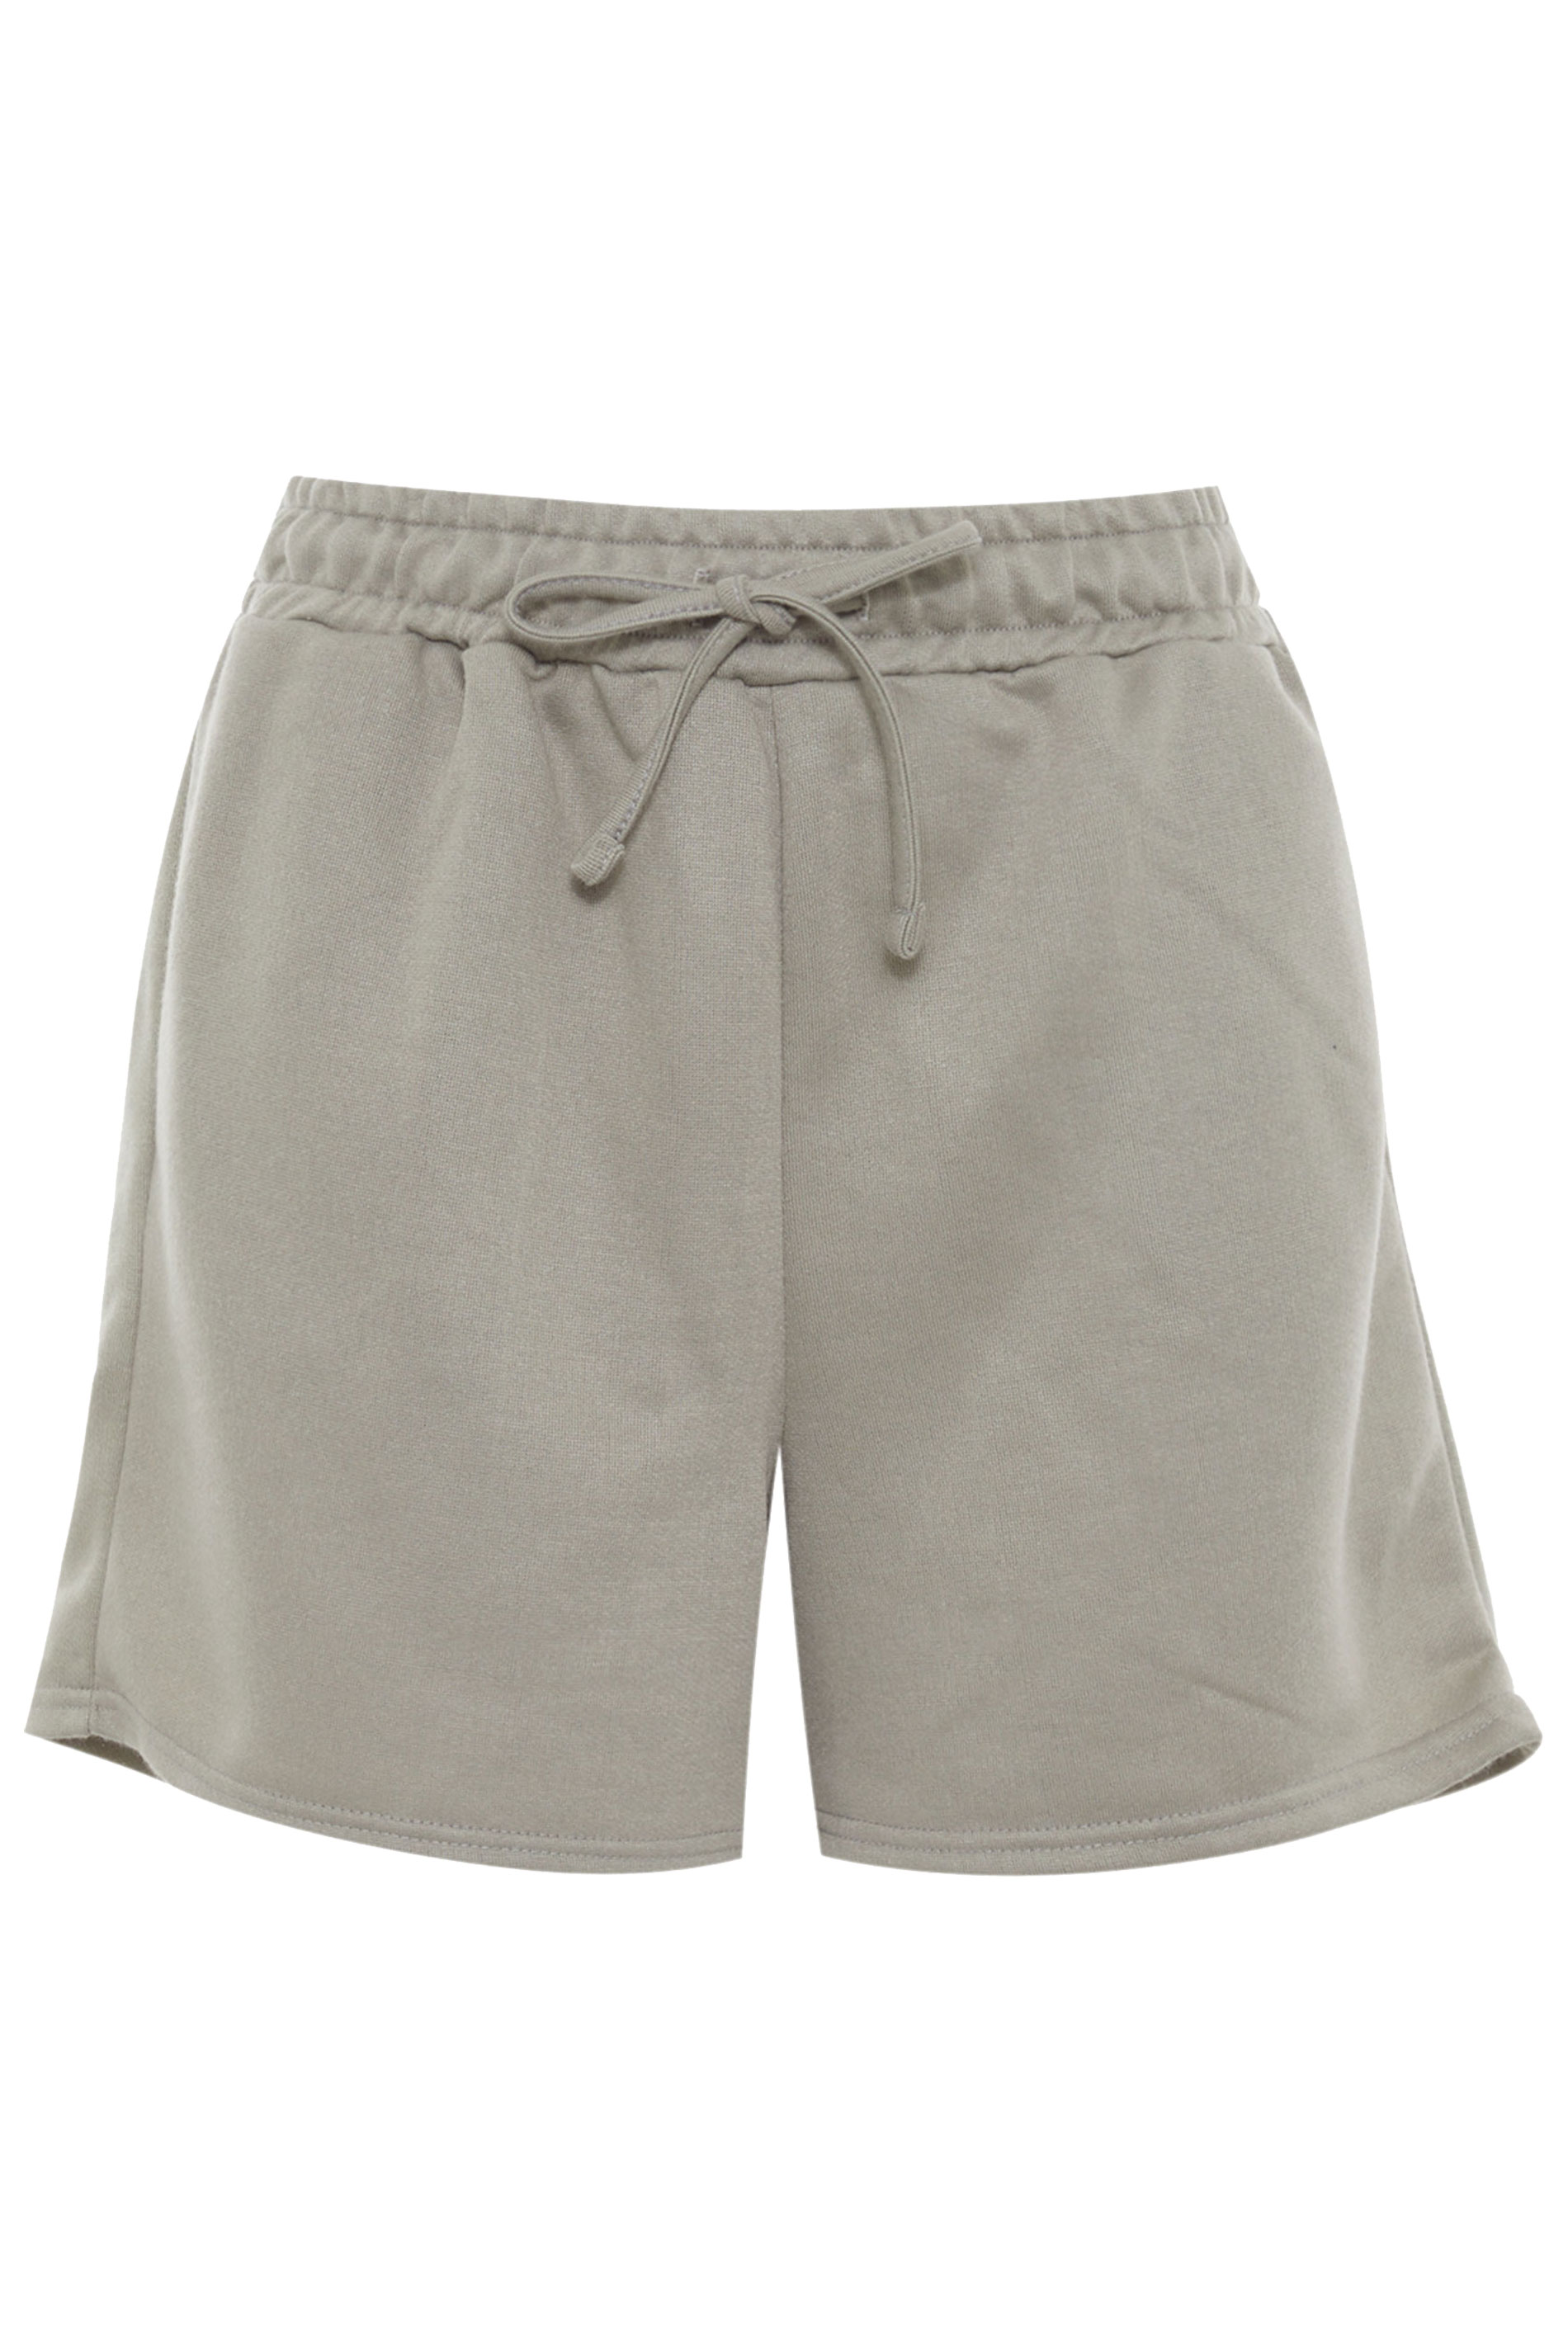 LTS Khaki Green Jersey Sweat Shorts | Long Tall Sally